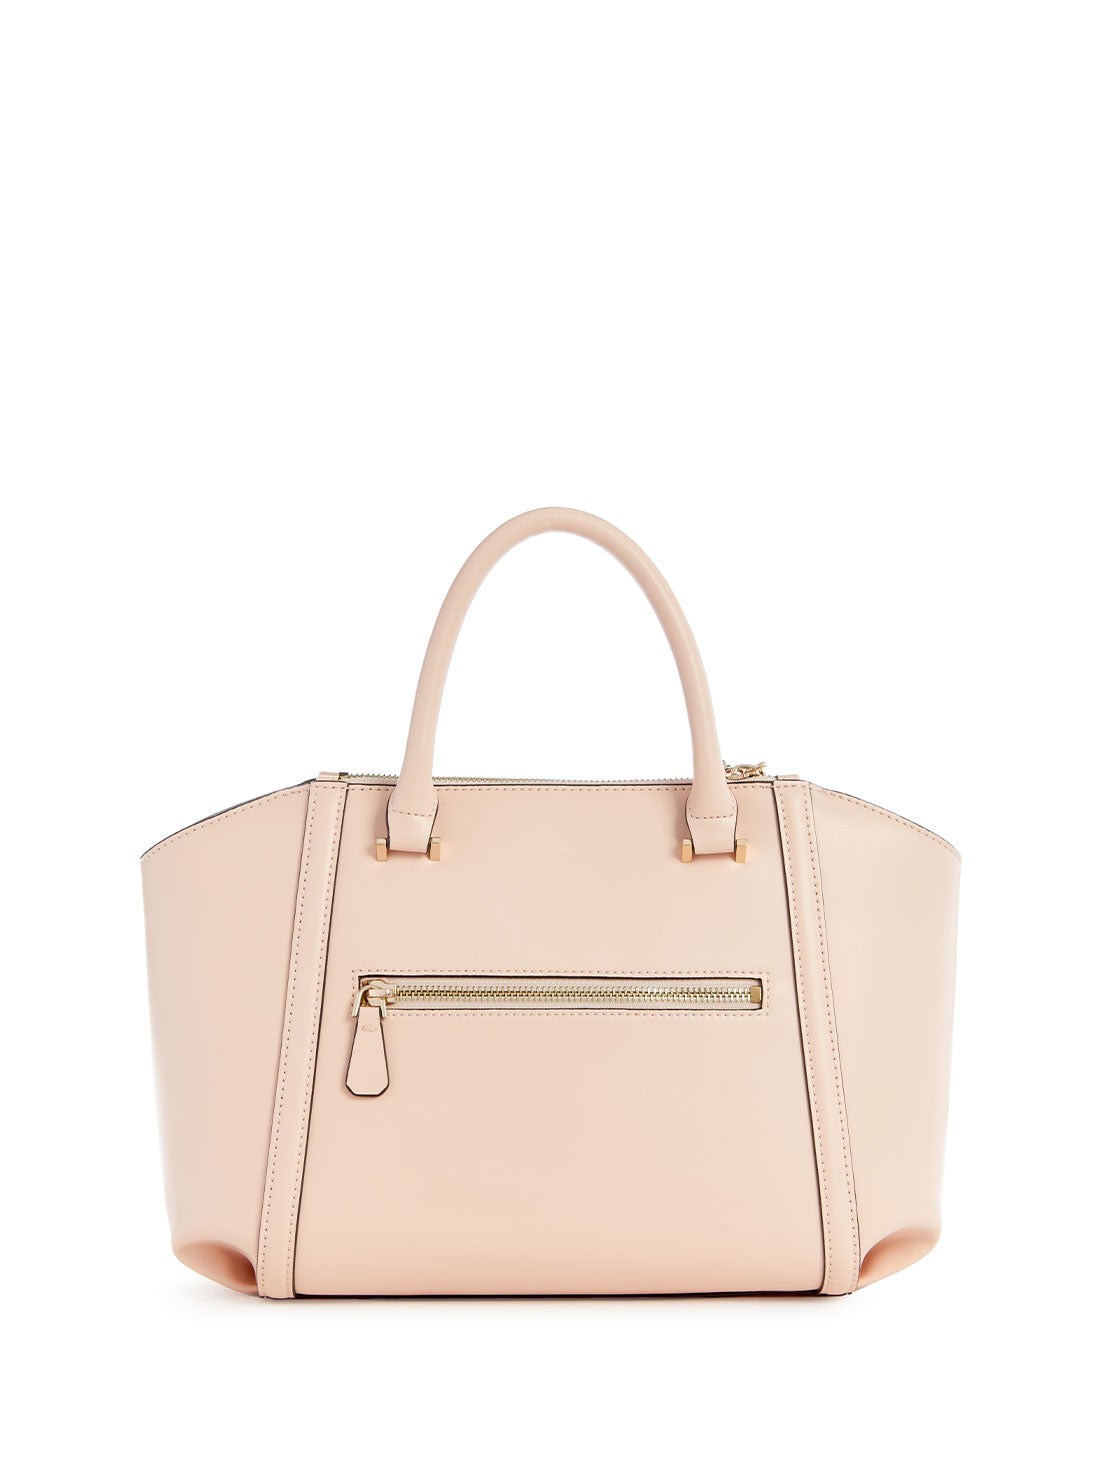 Pale Pink Leie Status Satchel Bag | GUESS Women's Handbags | back view